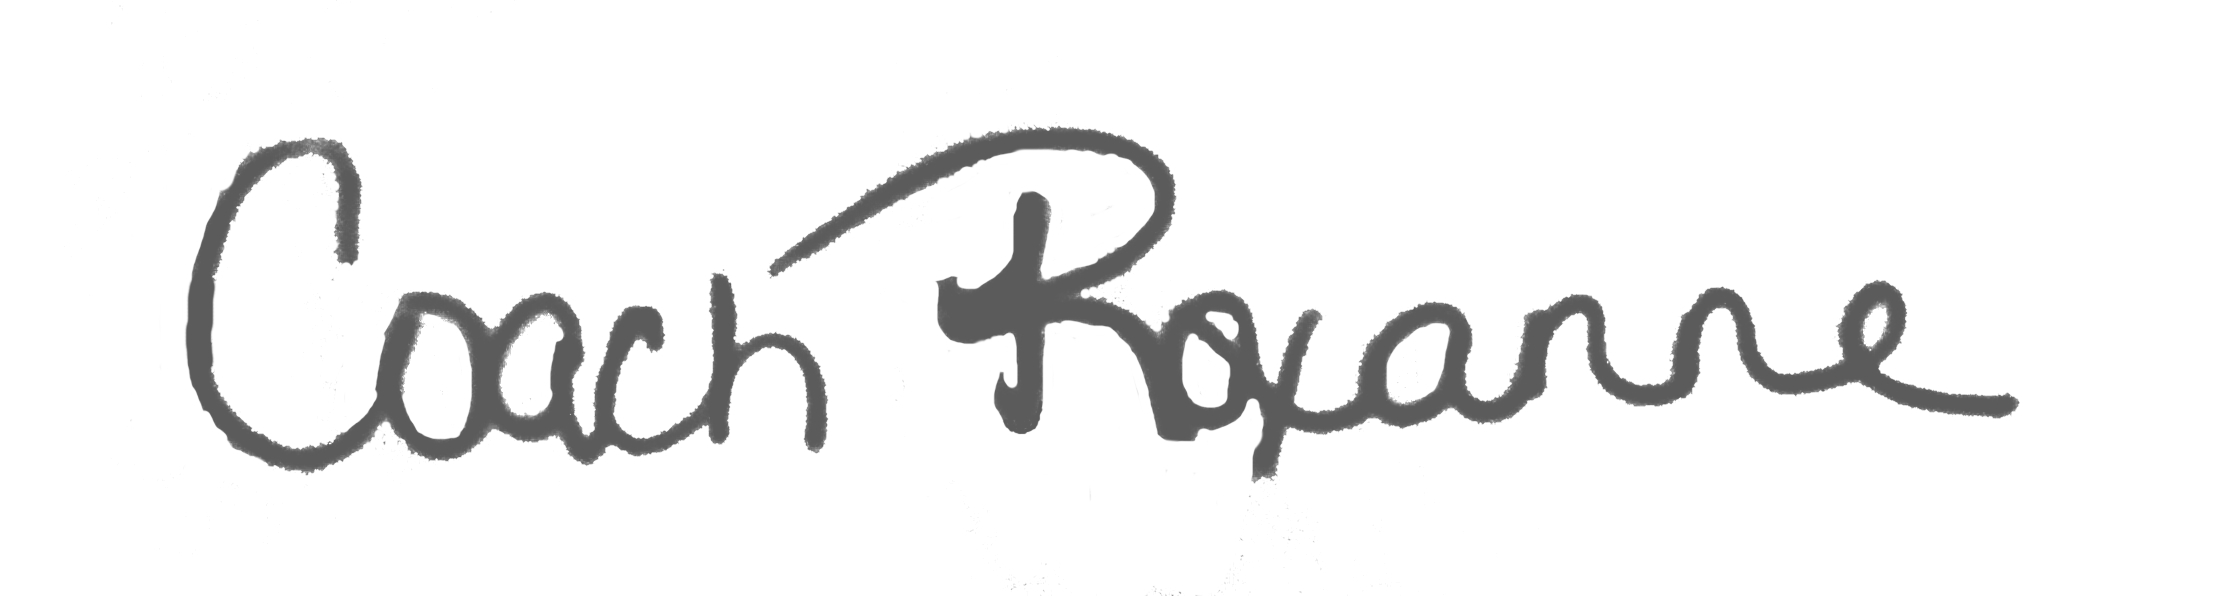 Coach Roxanne Signature